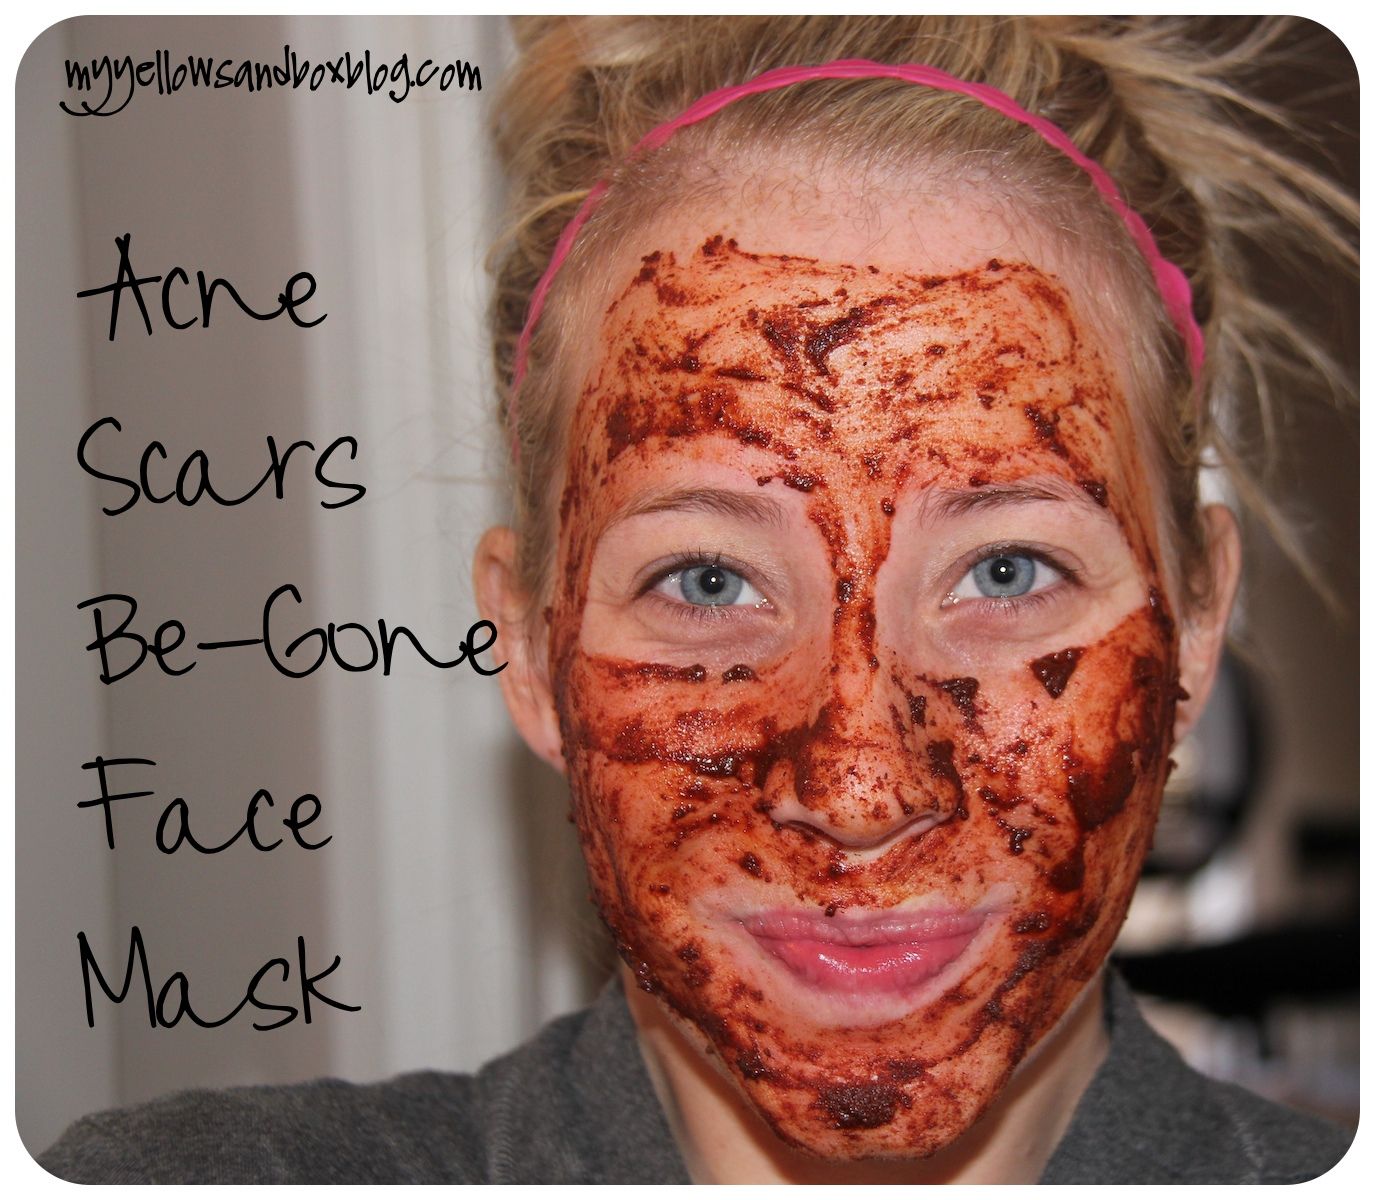 Natural face mask: nutmeg (anti-inflammatory), cinnamon (anti-fungal, astringent